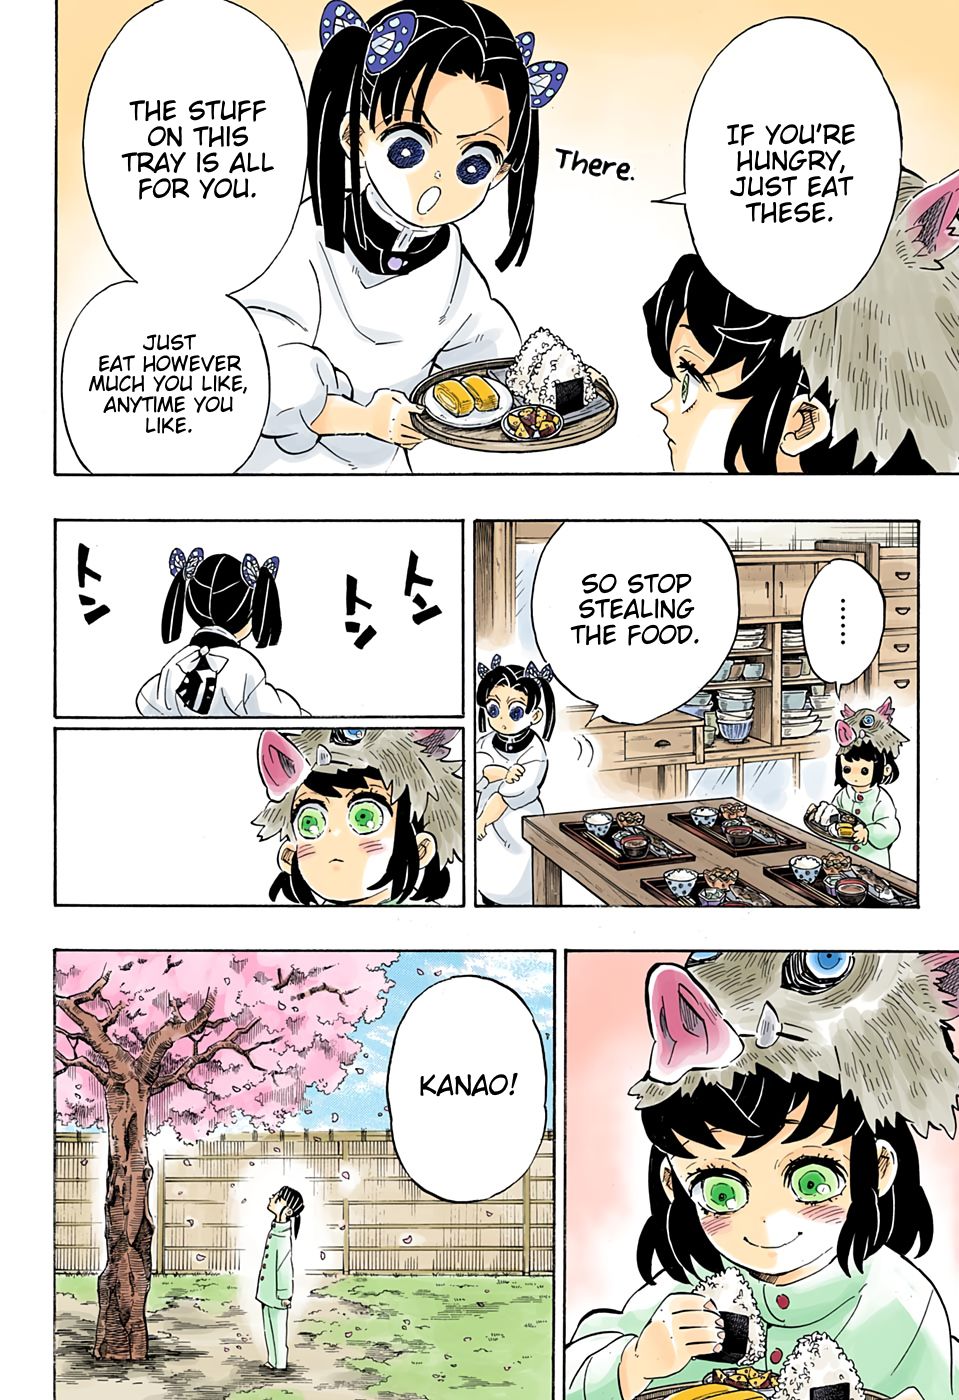 Read Kimetsu No Yaiba Digital Colored Comics Manga English New Chapters Online Free Mangaclash